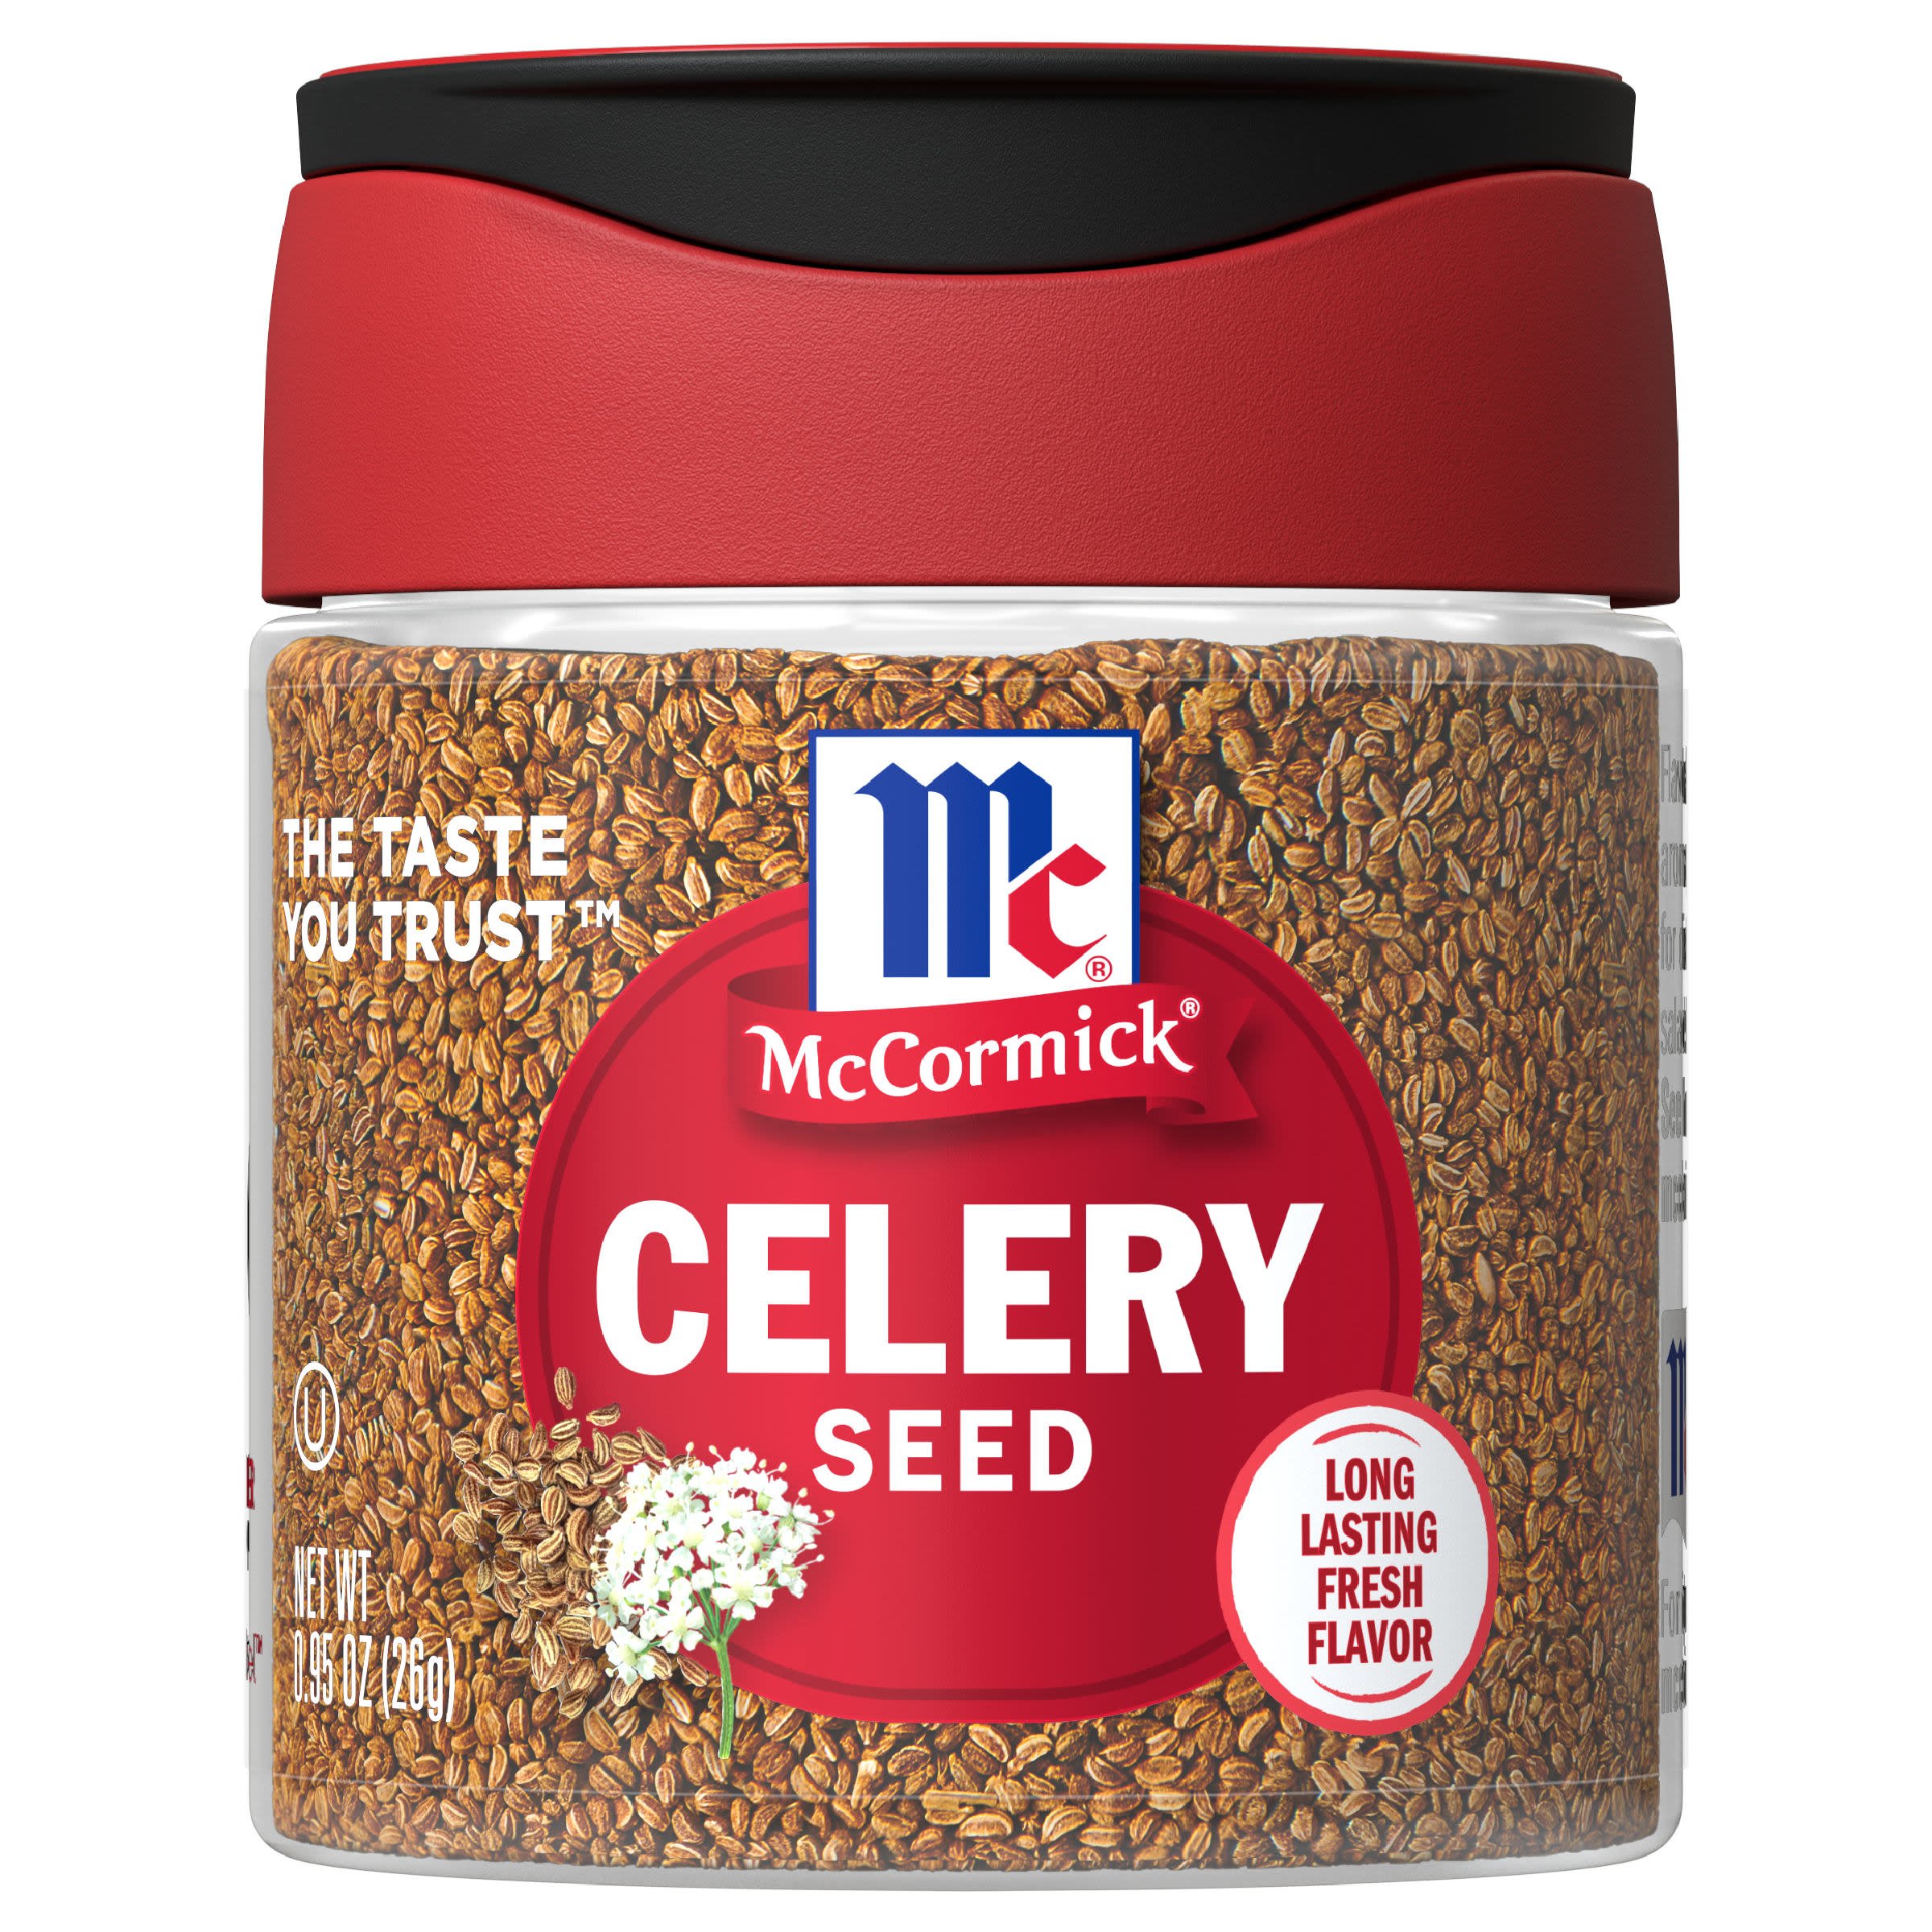 celery seed